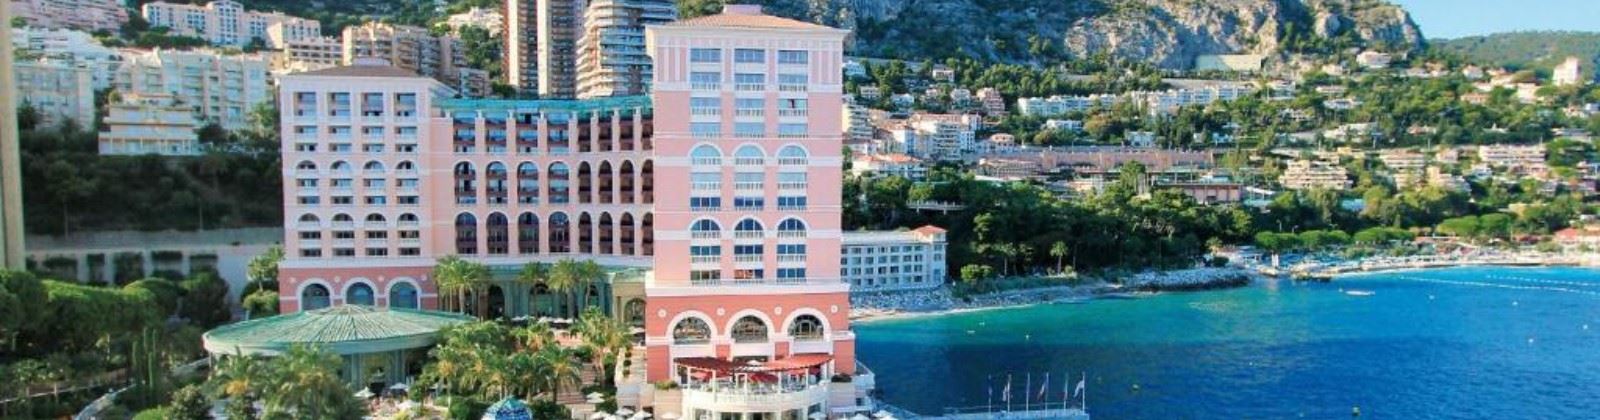 monte carlo bay hotel et resort monaco olevene restaurant seminaire booking 